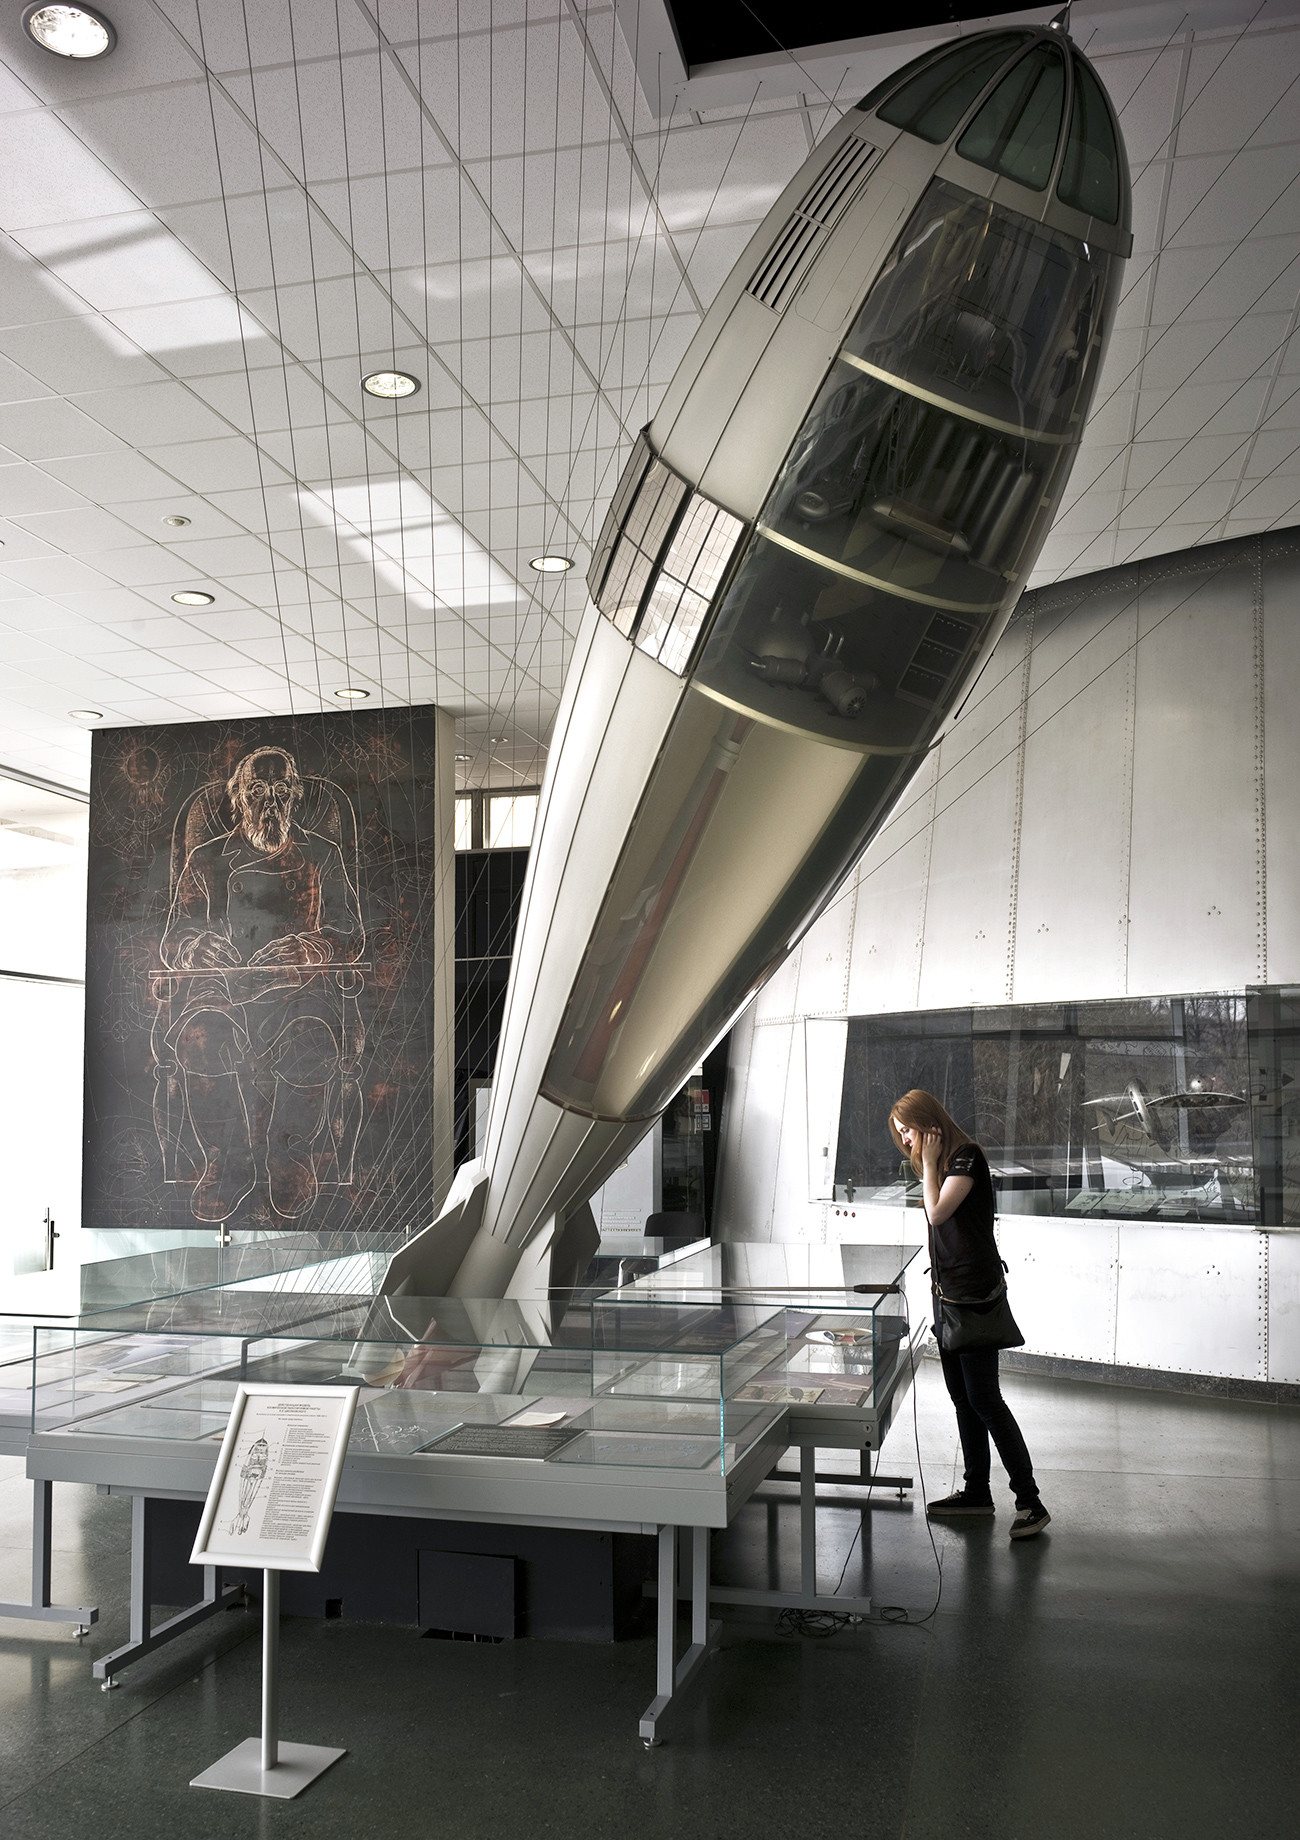 Modelo del cohete de Tsiolkovski.